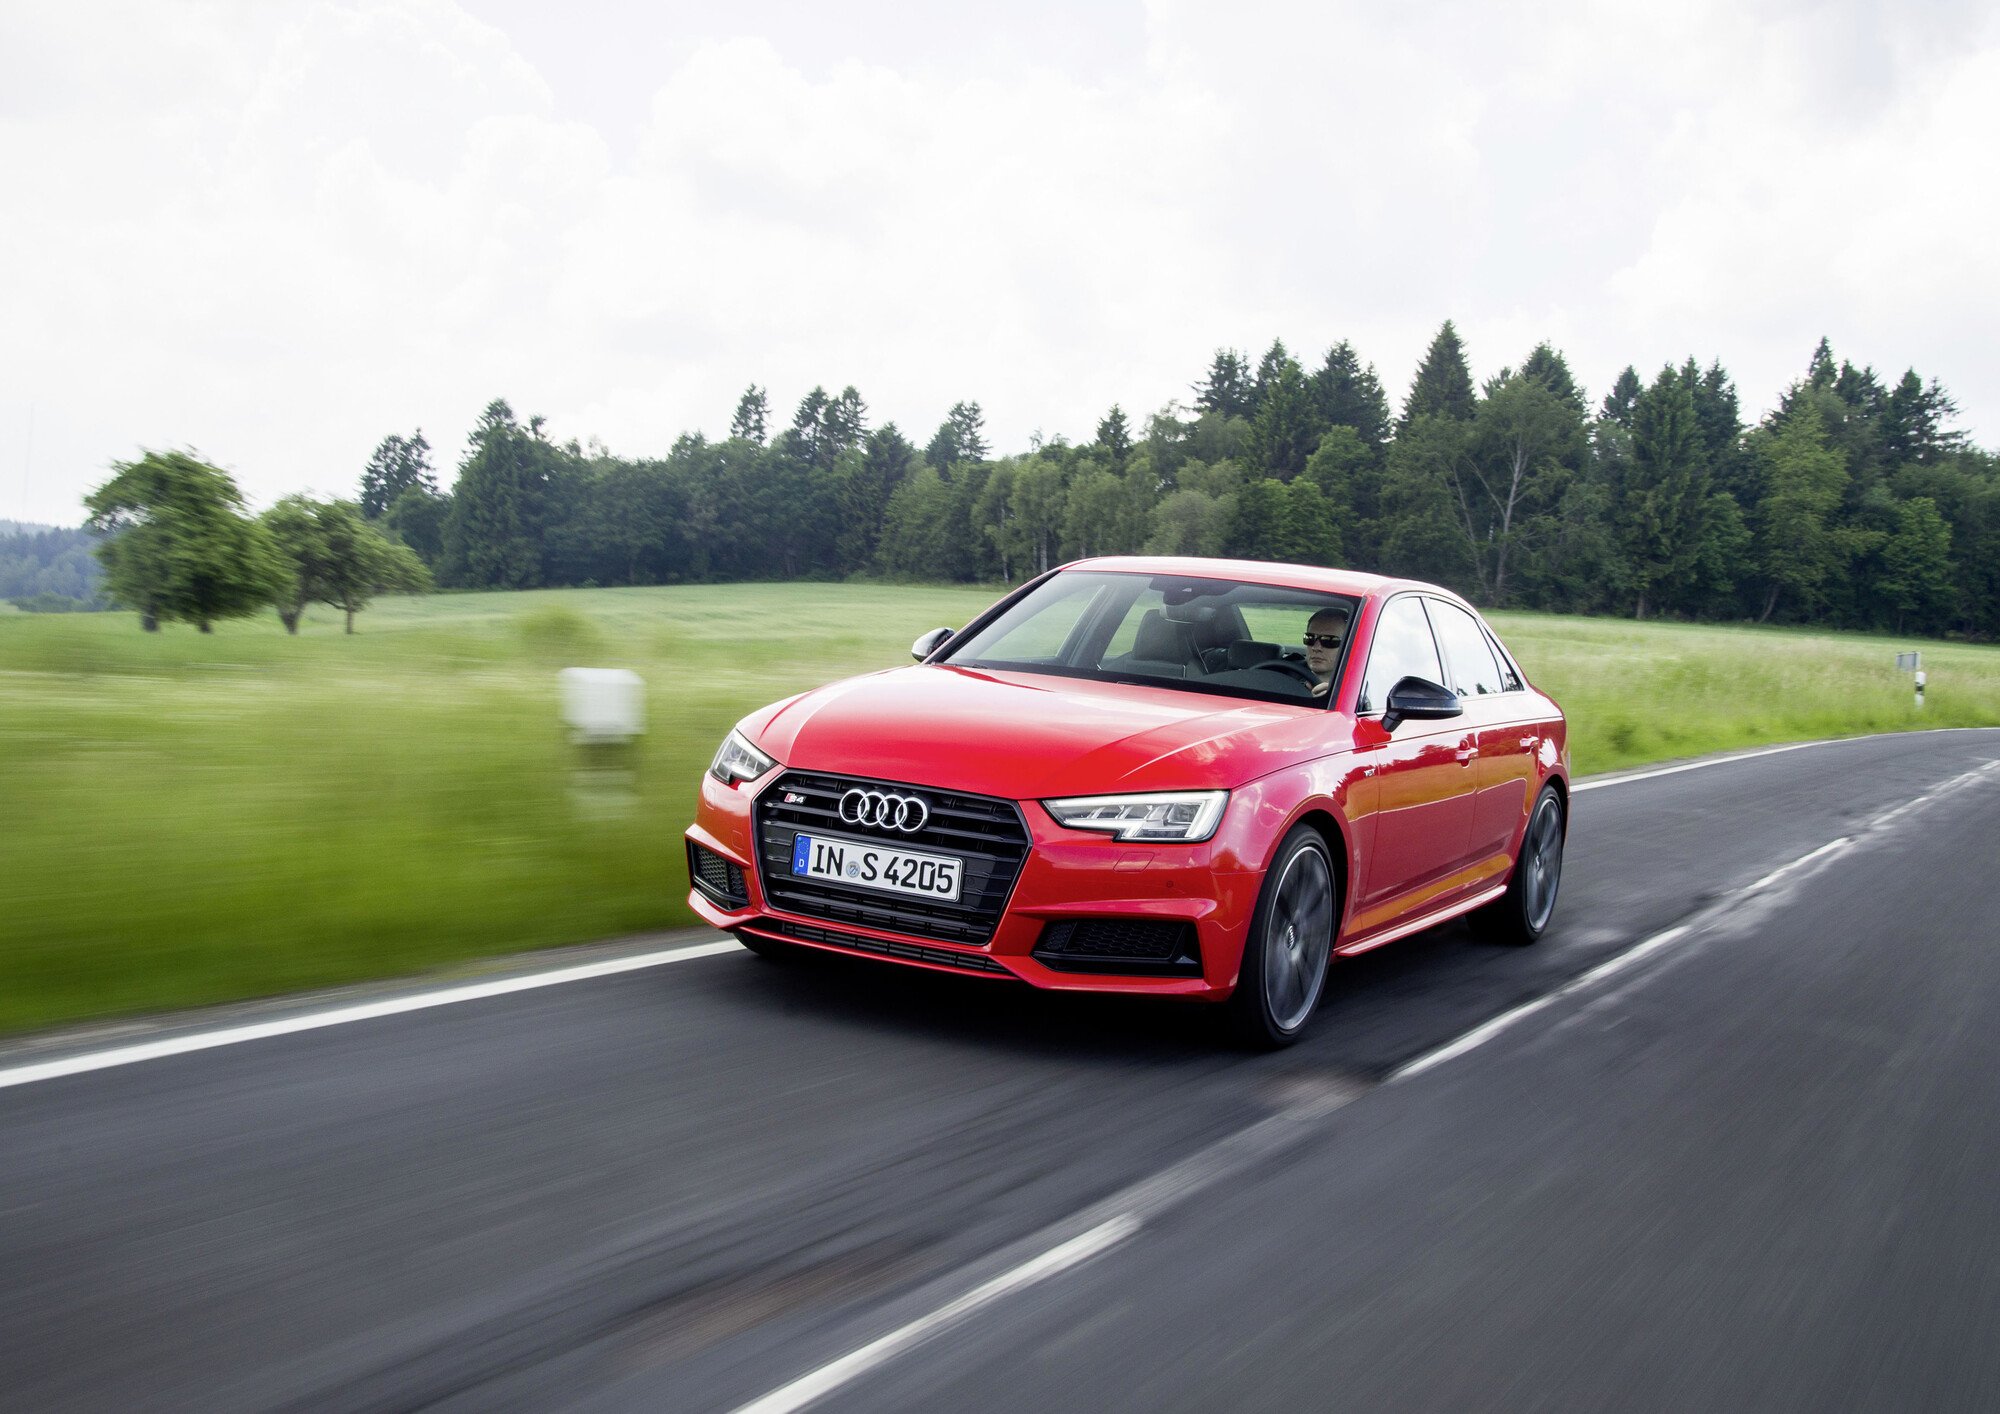 Nuova Audi S4 [Video Prime Impressioni]